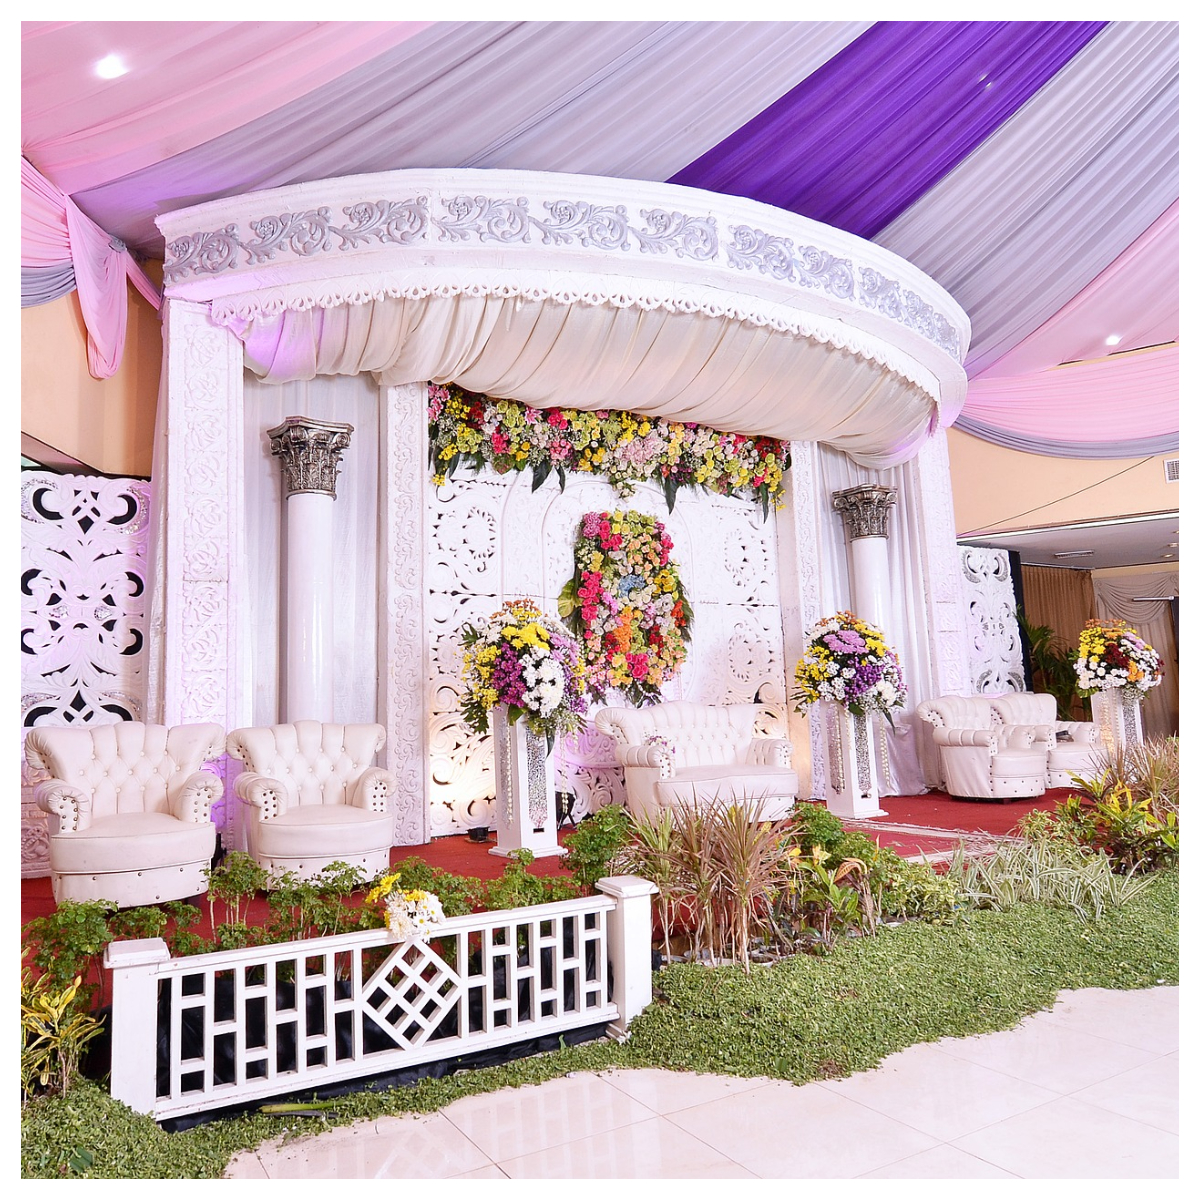 4 Wedding stage decor ideas to blow your mind away | PINKVILLA